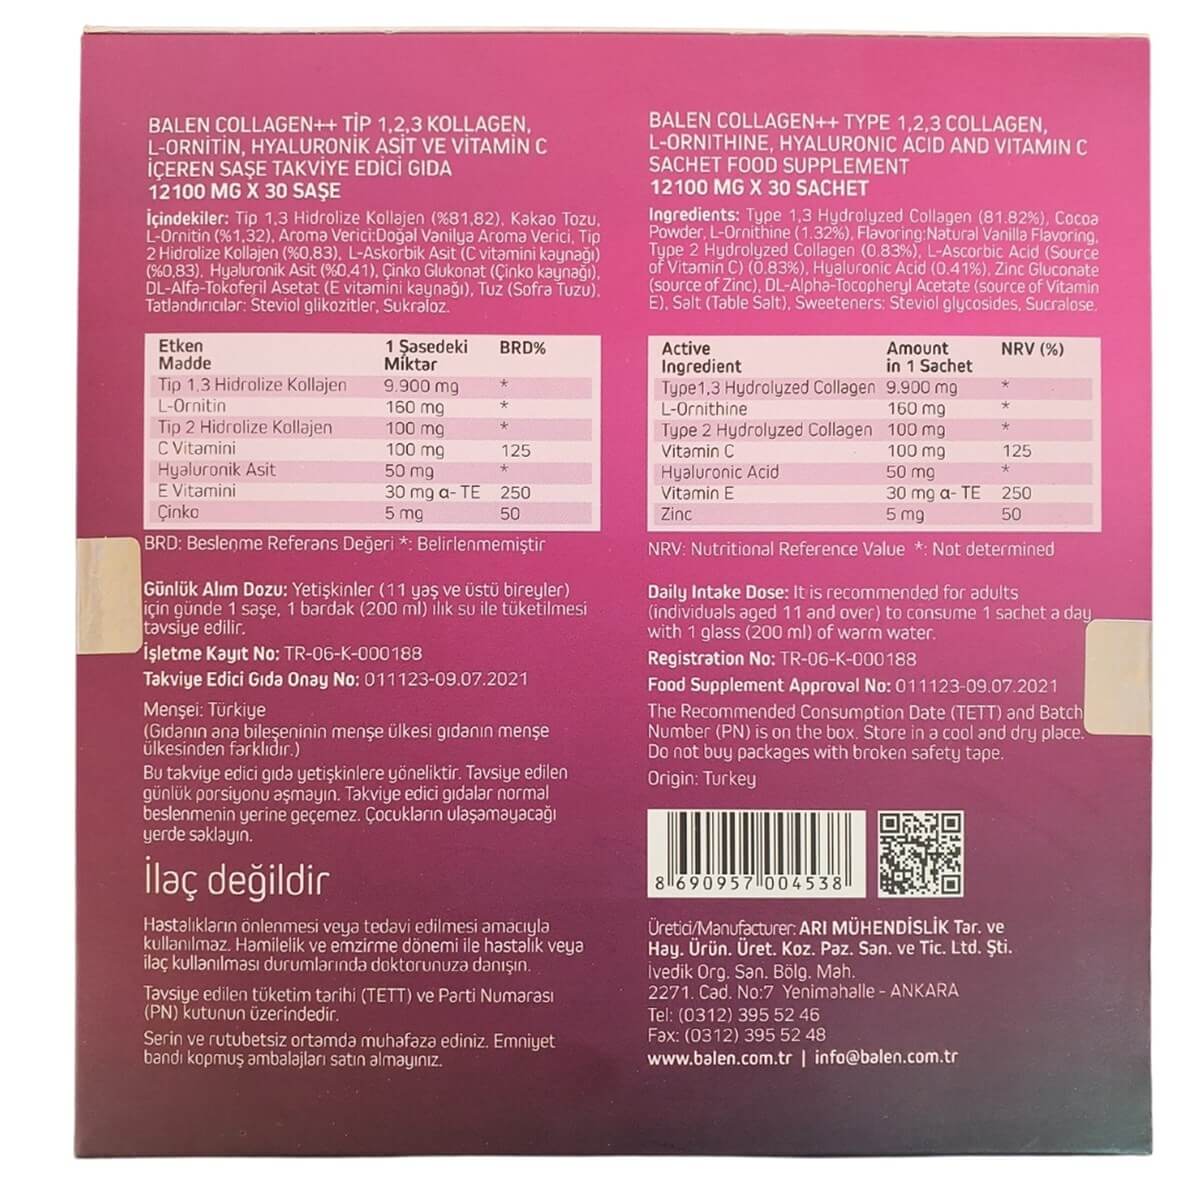 Balen Collagen Tip 1,2,3 L-Ornitin Hyaluronik Asit C Vitamini 30 Şase 12100mg